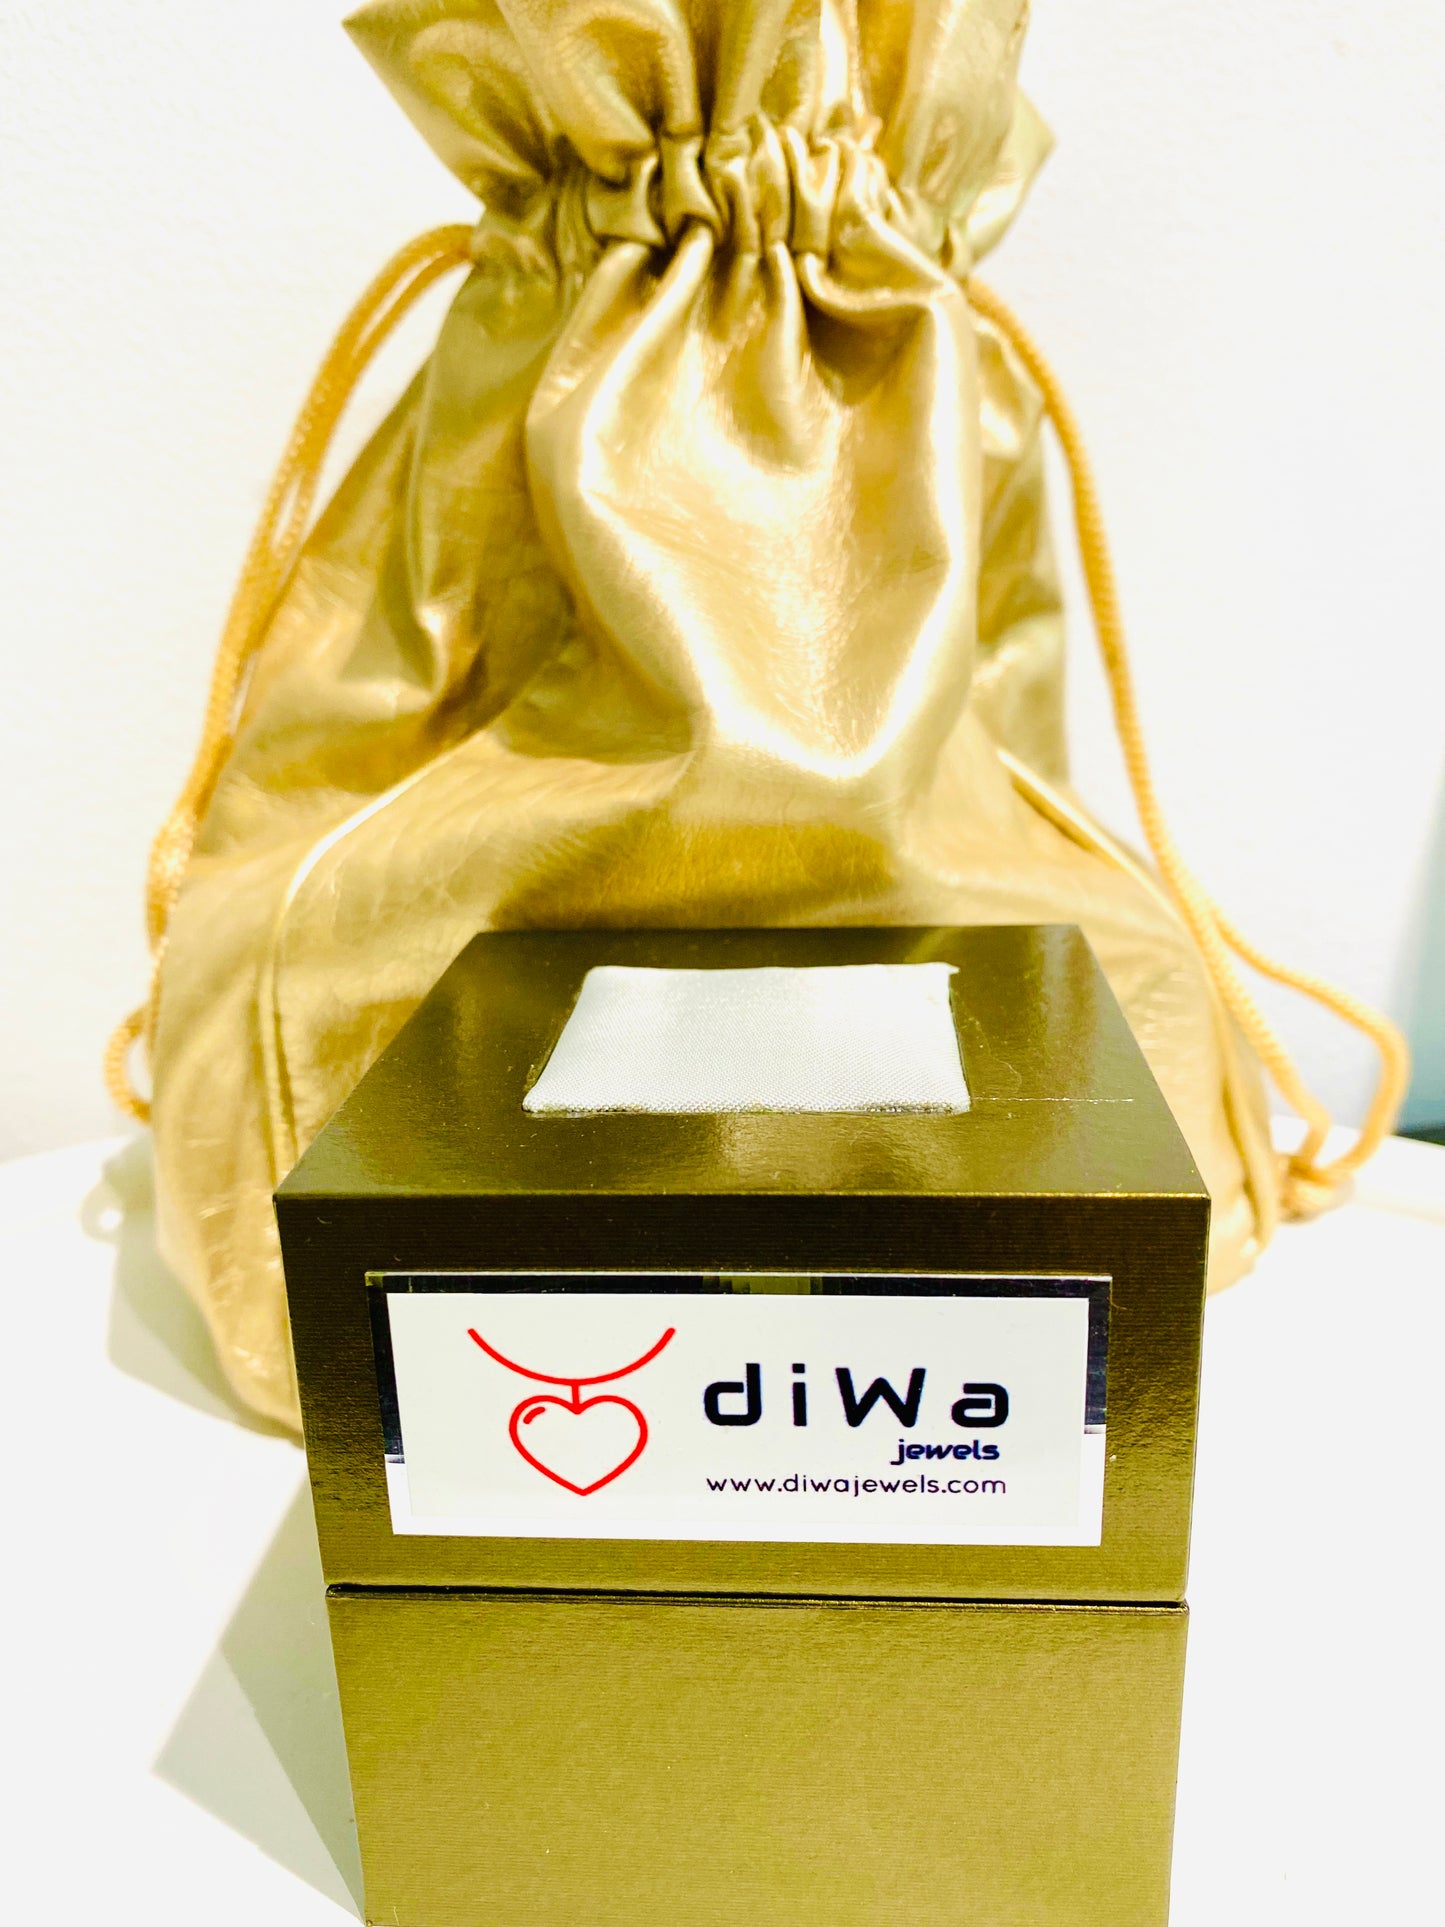 DiWa Jewels gift voucher